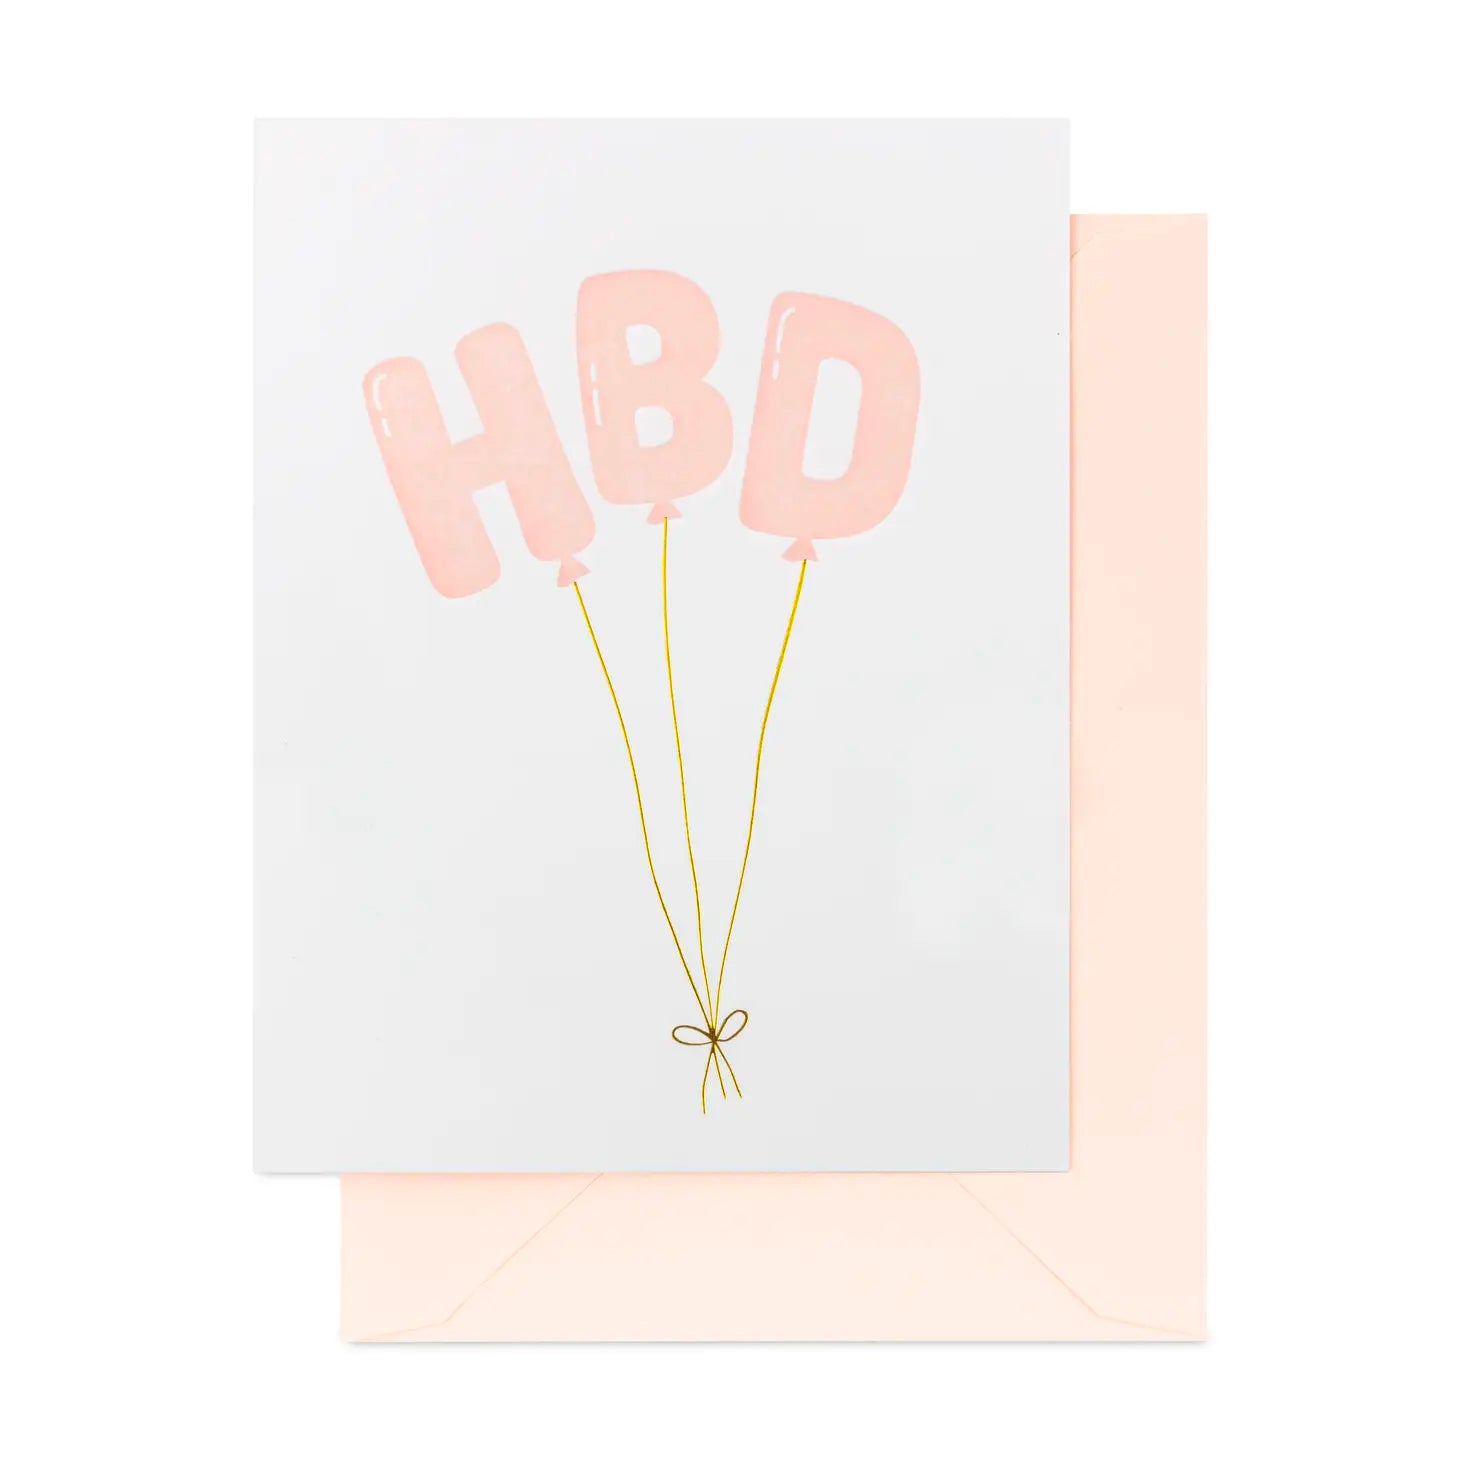 HBD Balloons Card